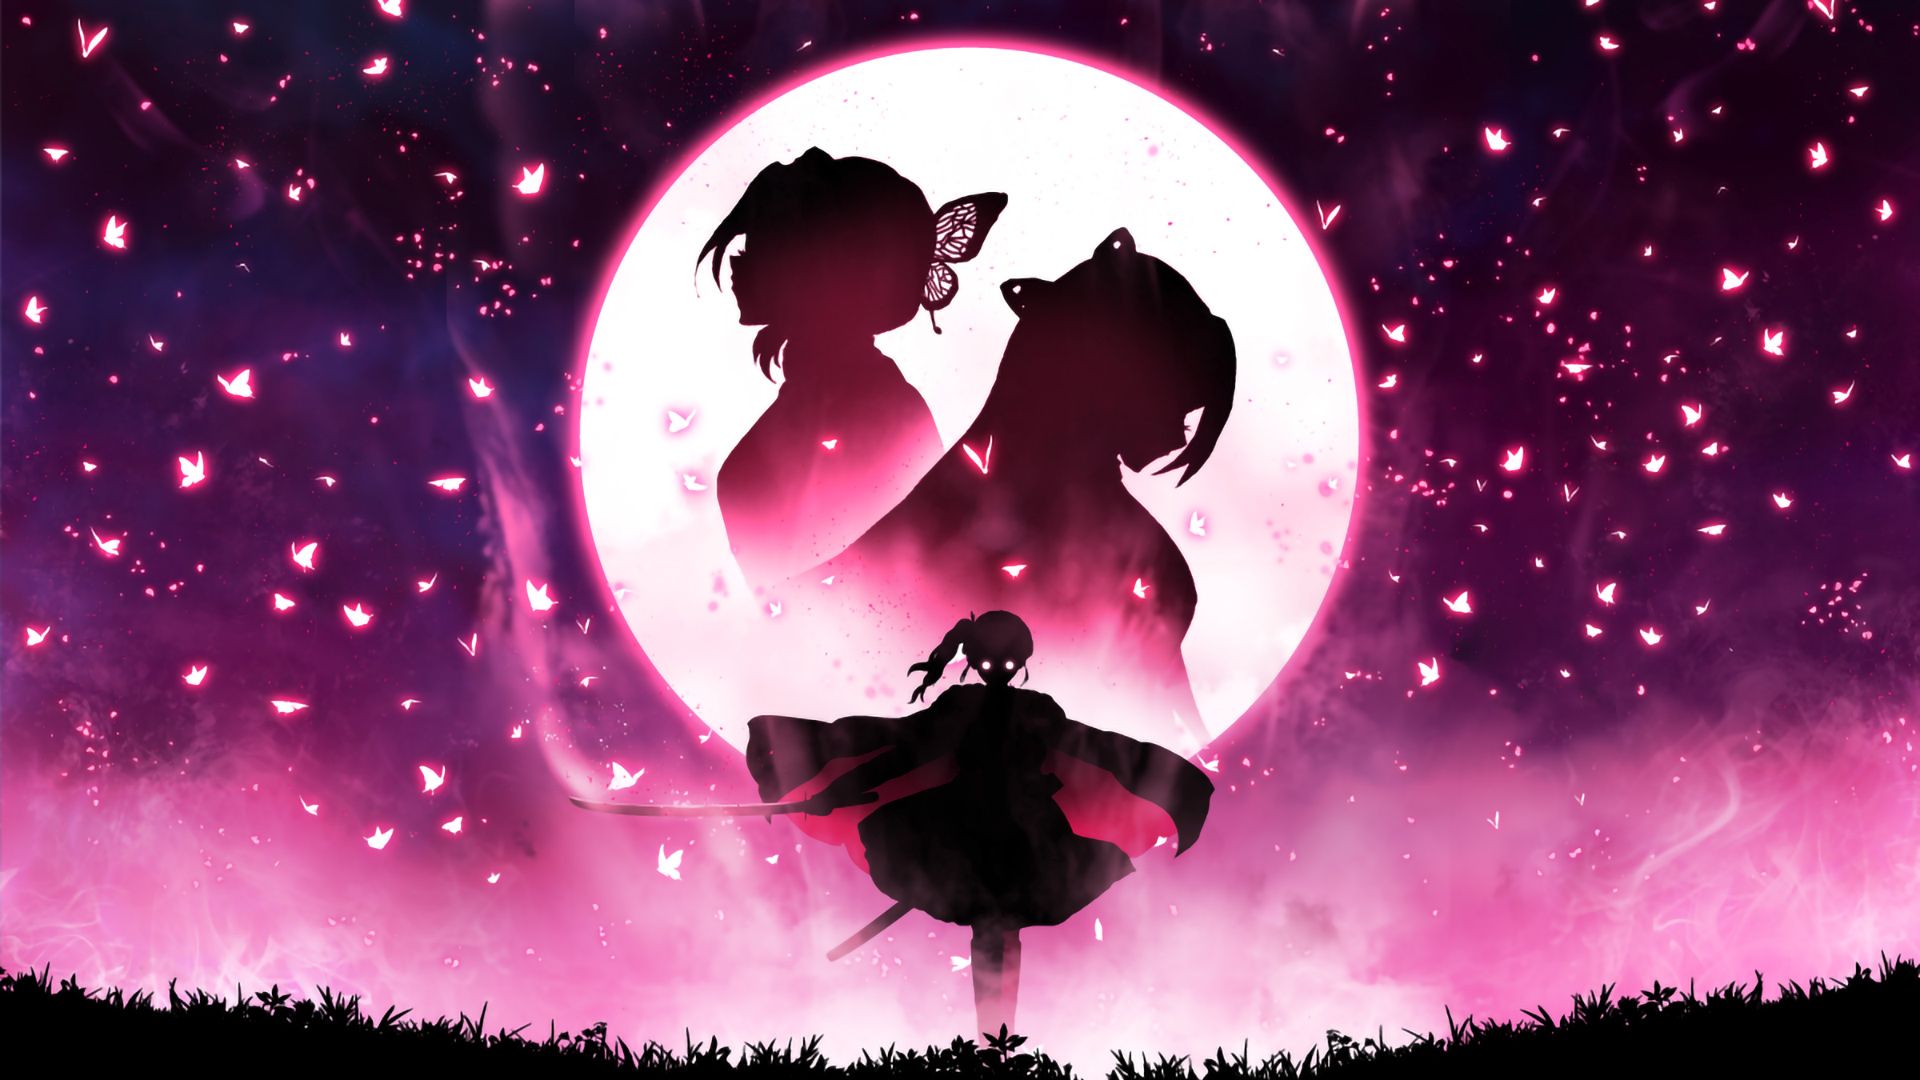 Demon Slayer Kanae Kocho Kanao Tsuyuri Shinobu Kochou With Background Of Image On Moon And Lighting Butterflies HD Anime Wallpaper